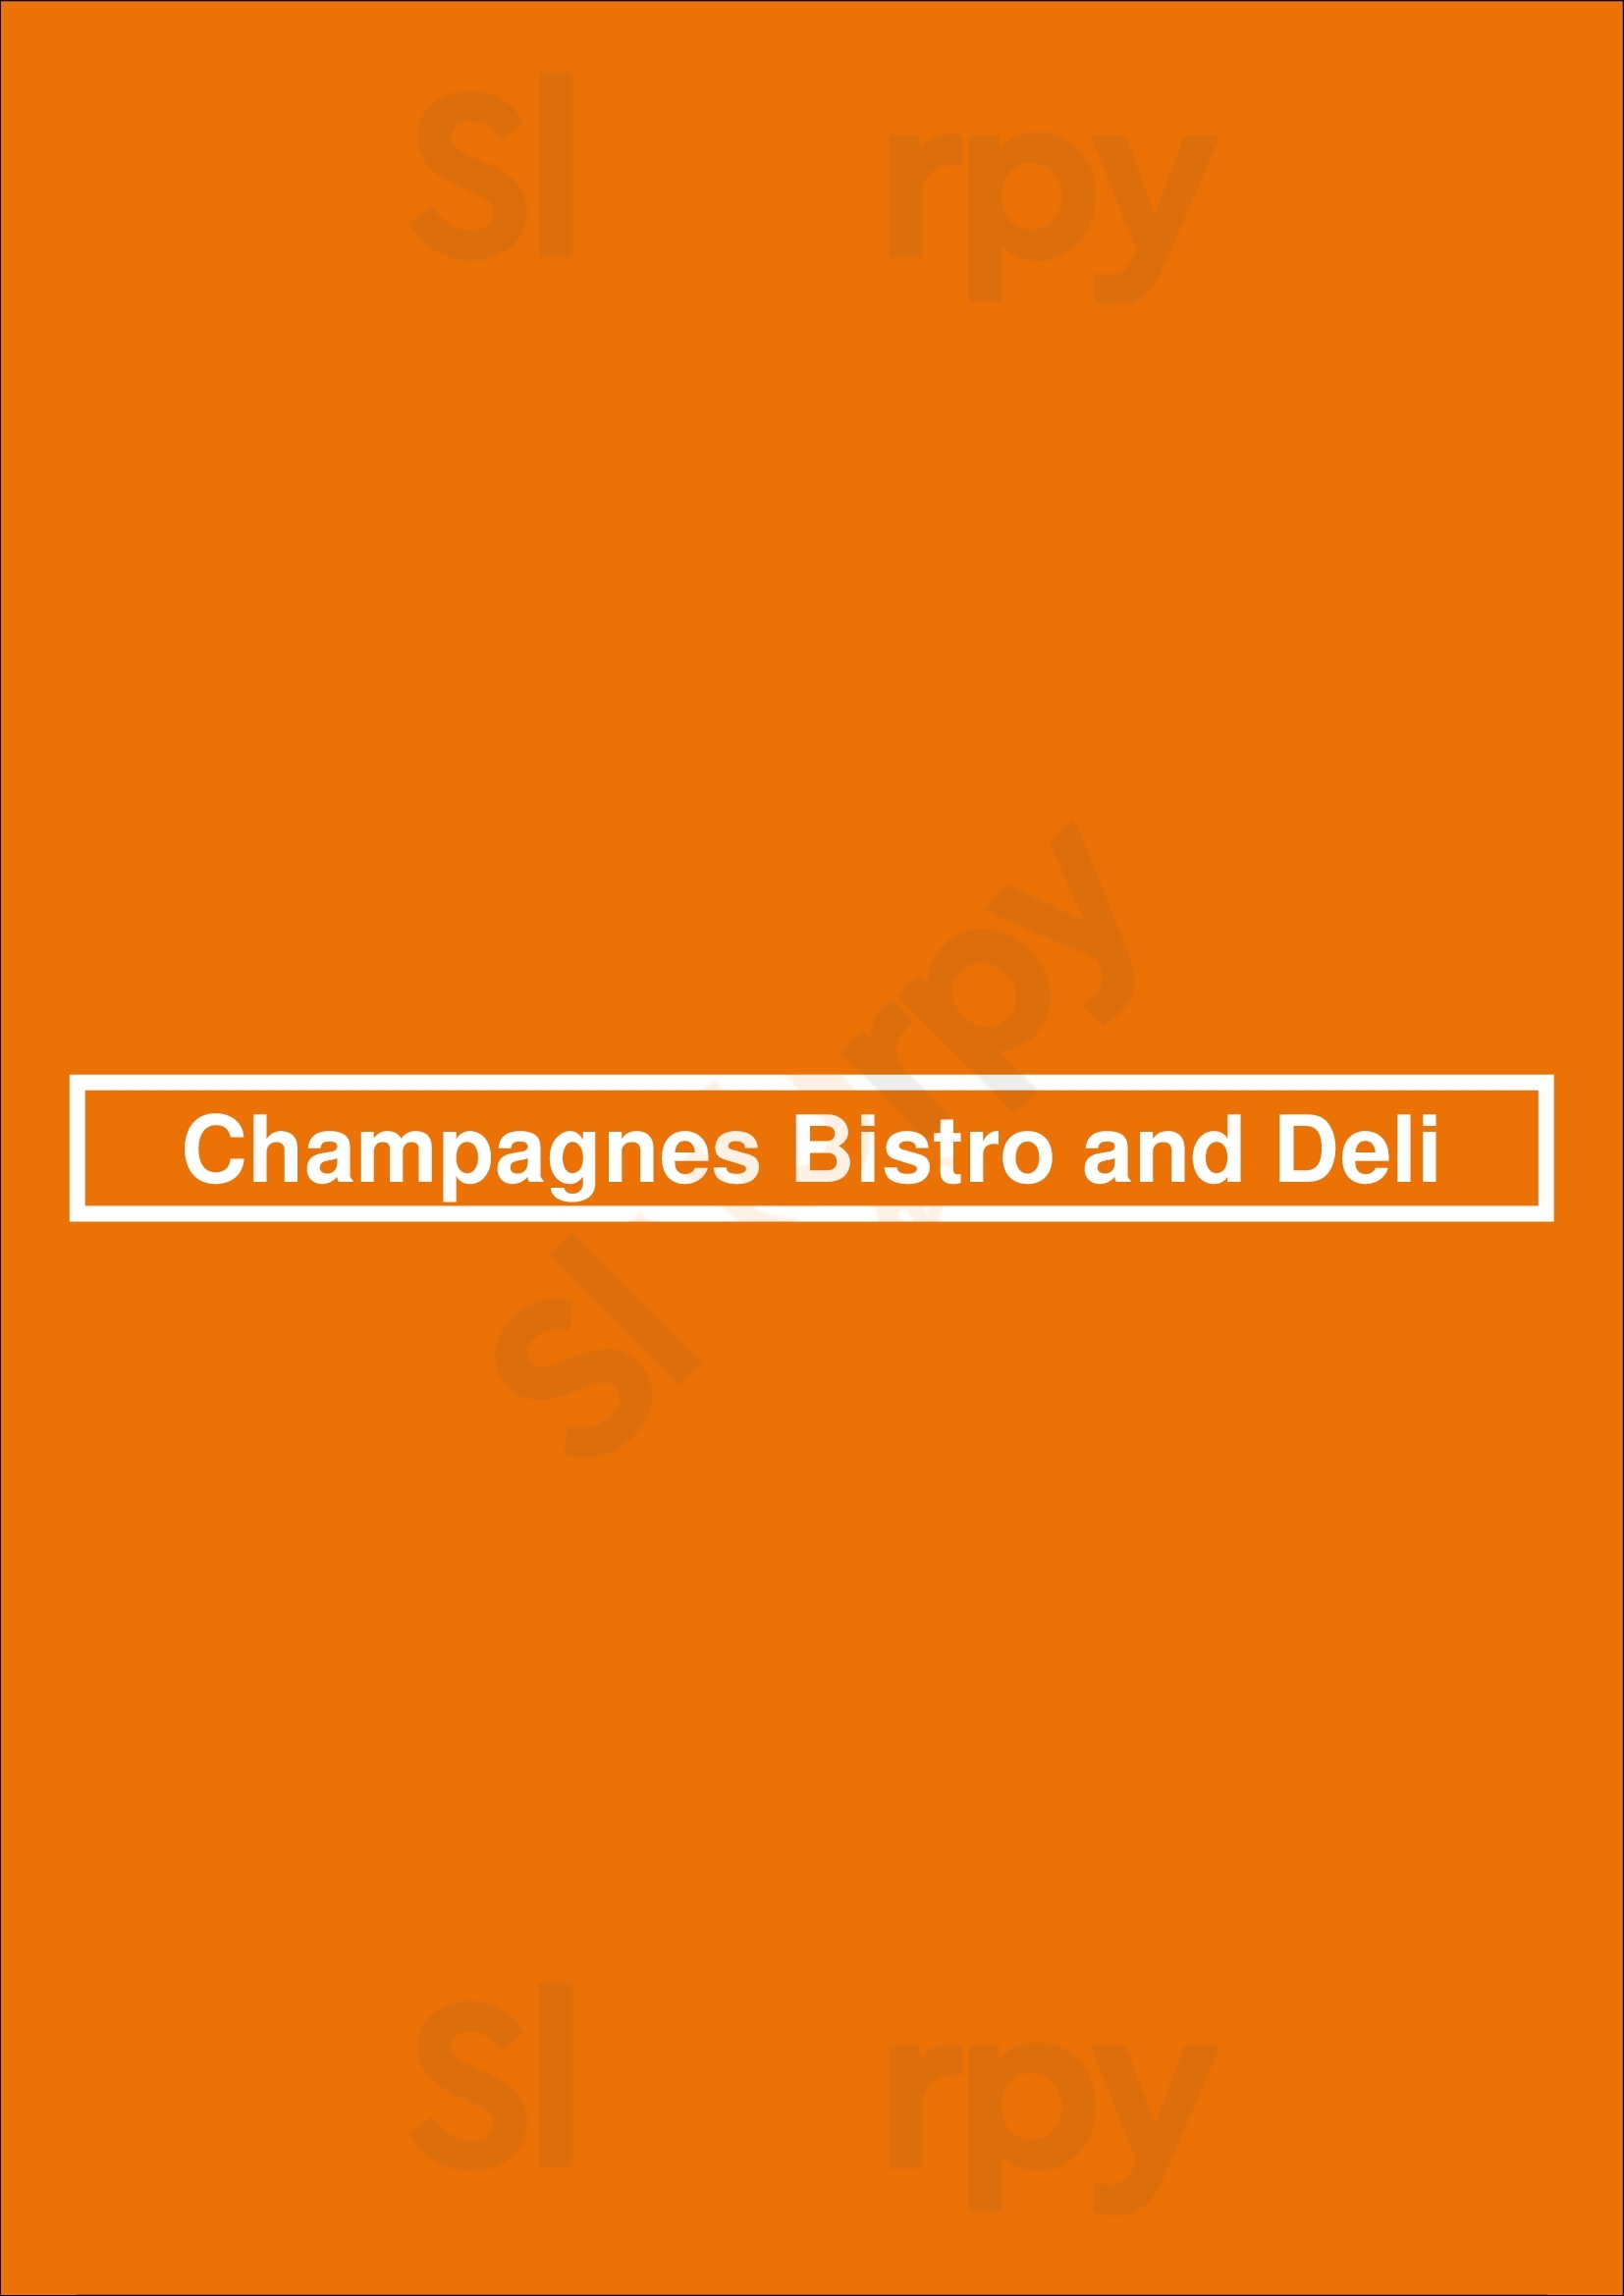 Champagnes Kitchen Newport Beach Menu - 1